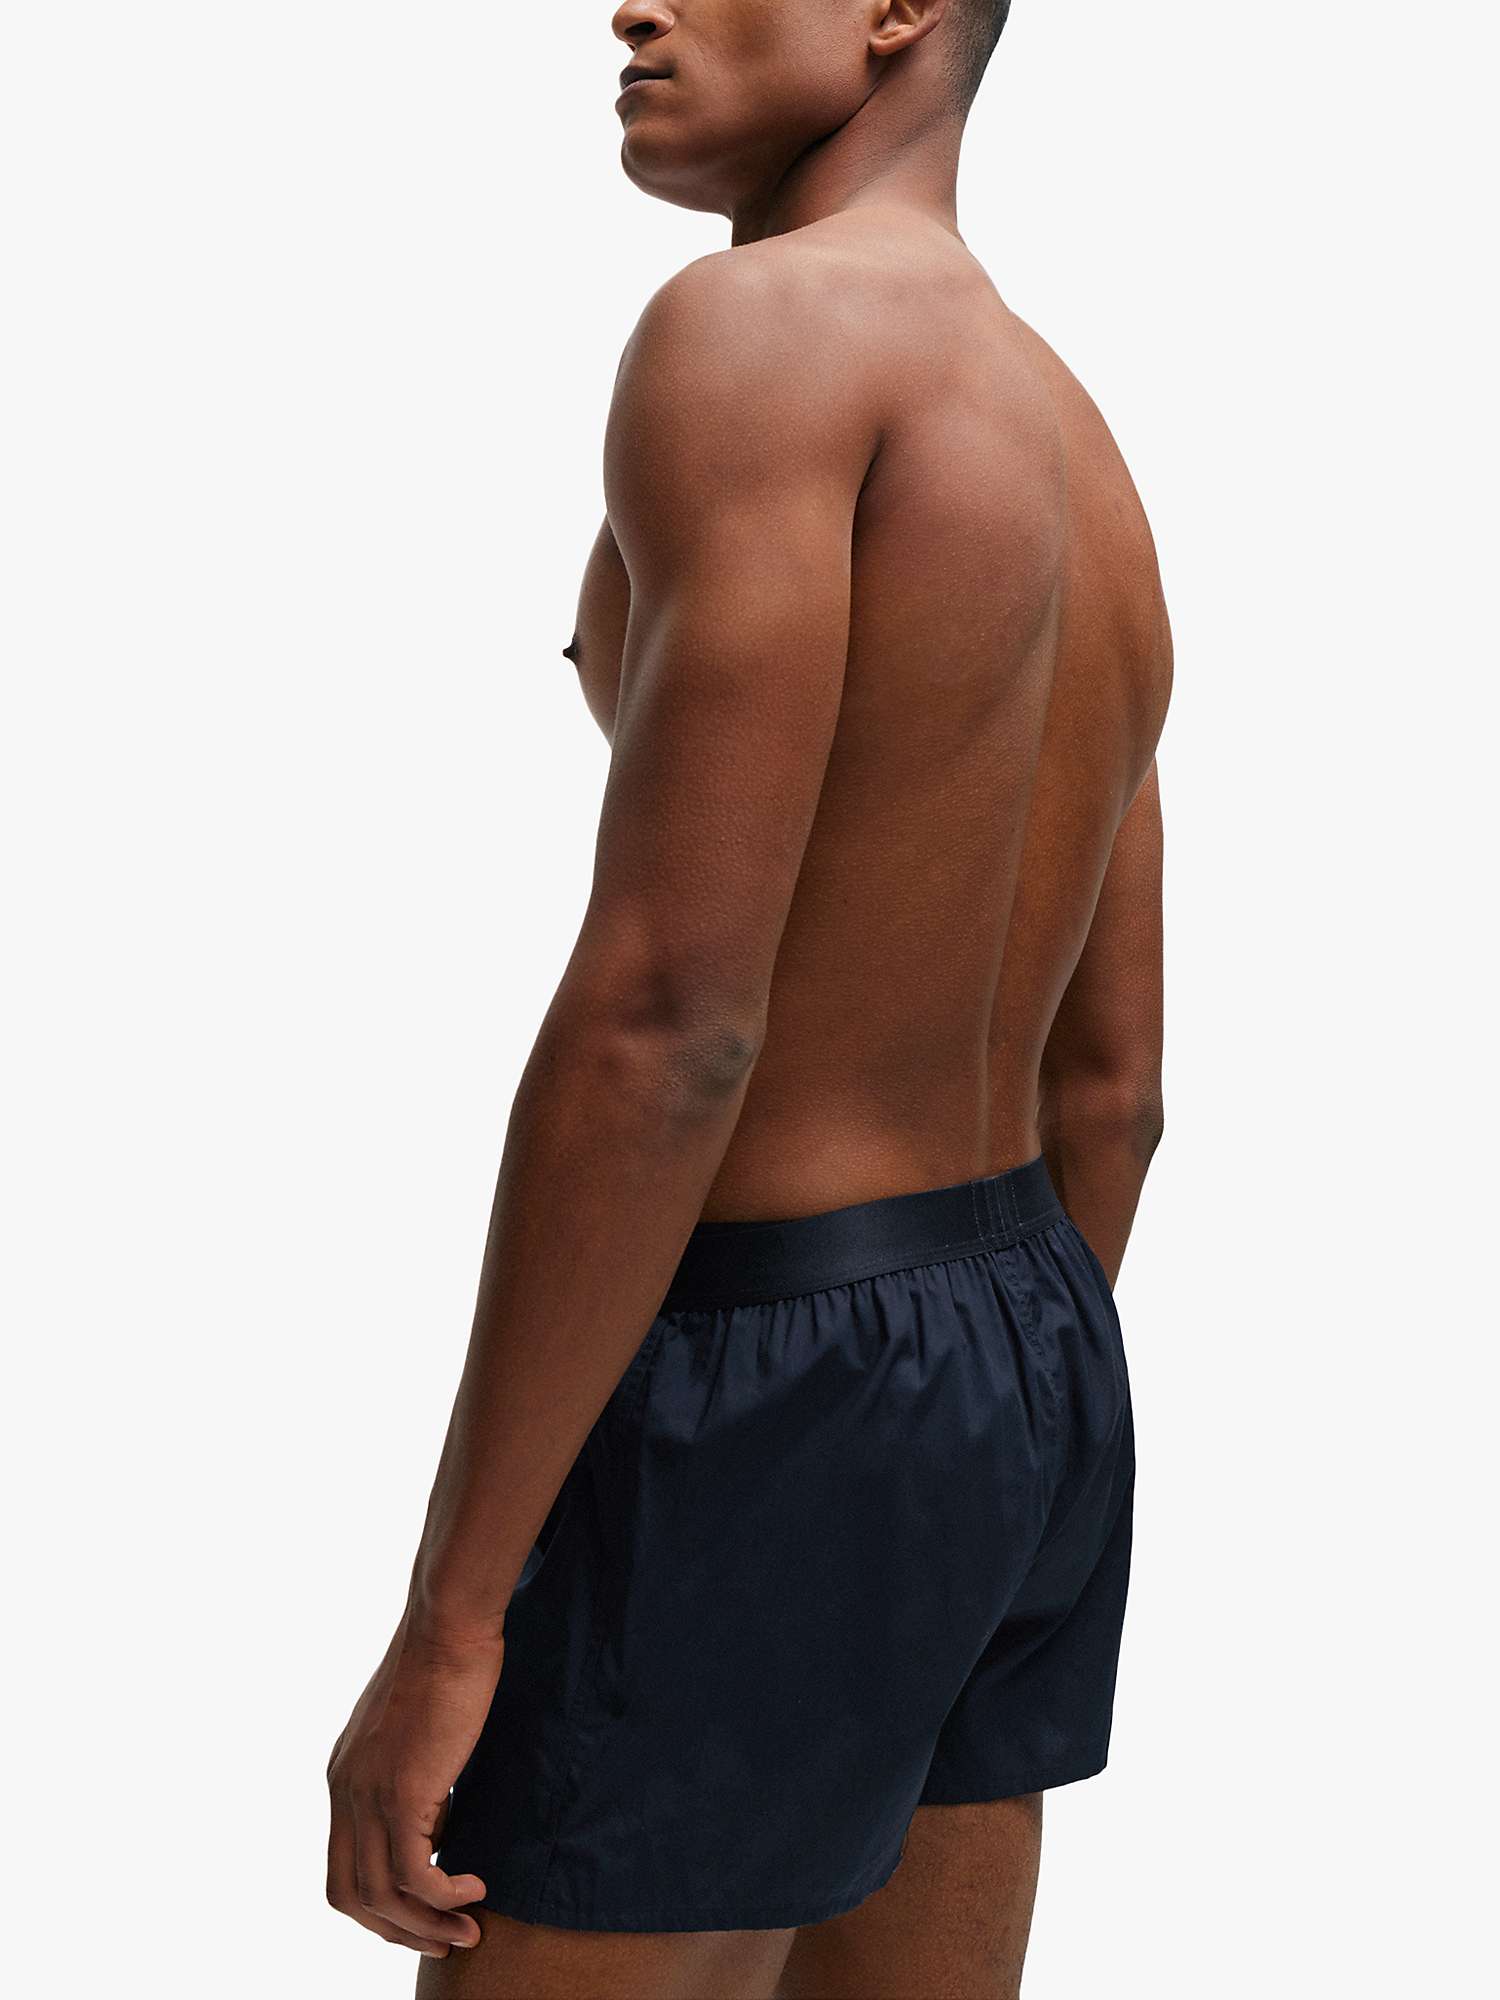 Buy BOSS Boxer Shorts, Pack of 2, Blue/Multi Online at johnlewis.com